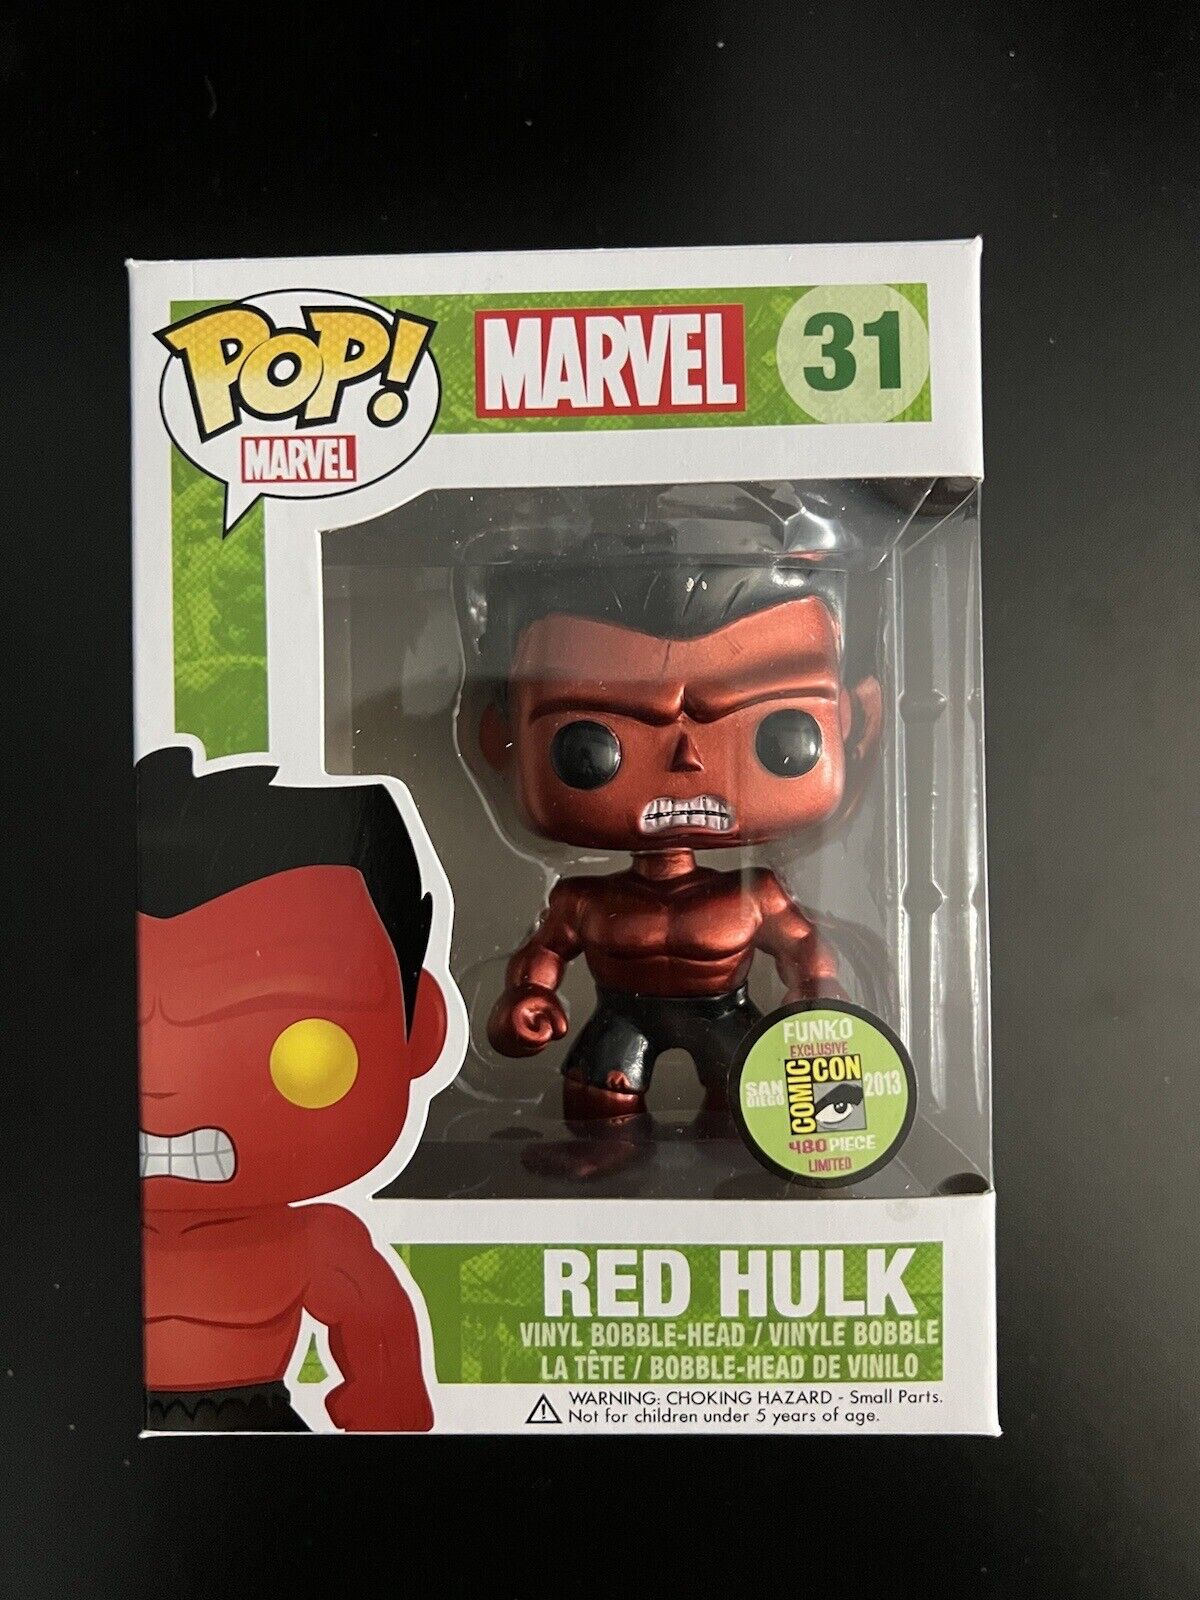 Red hulk